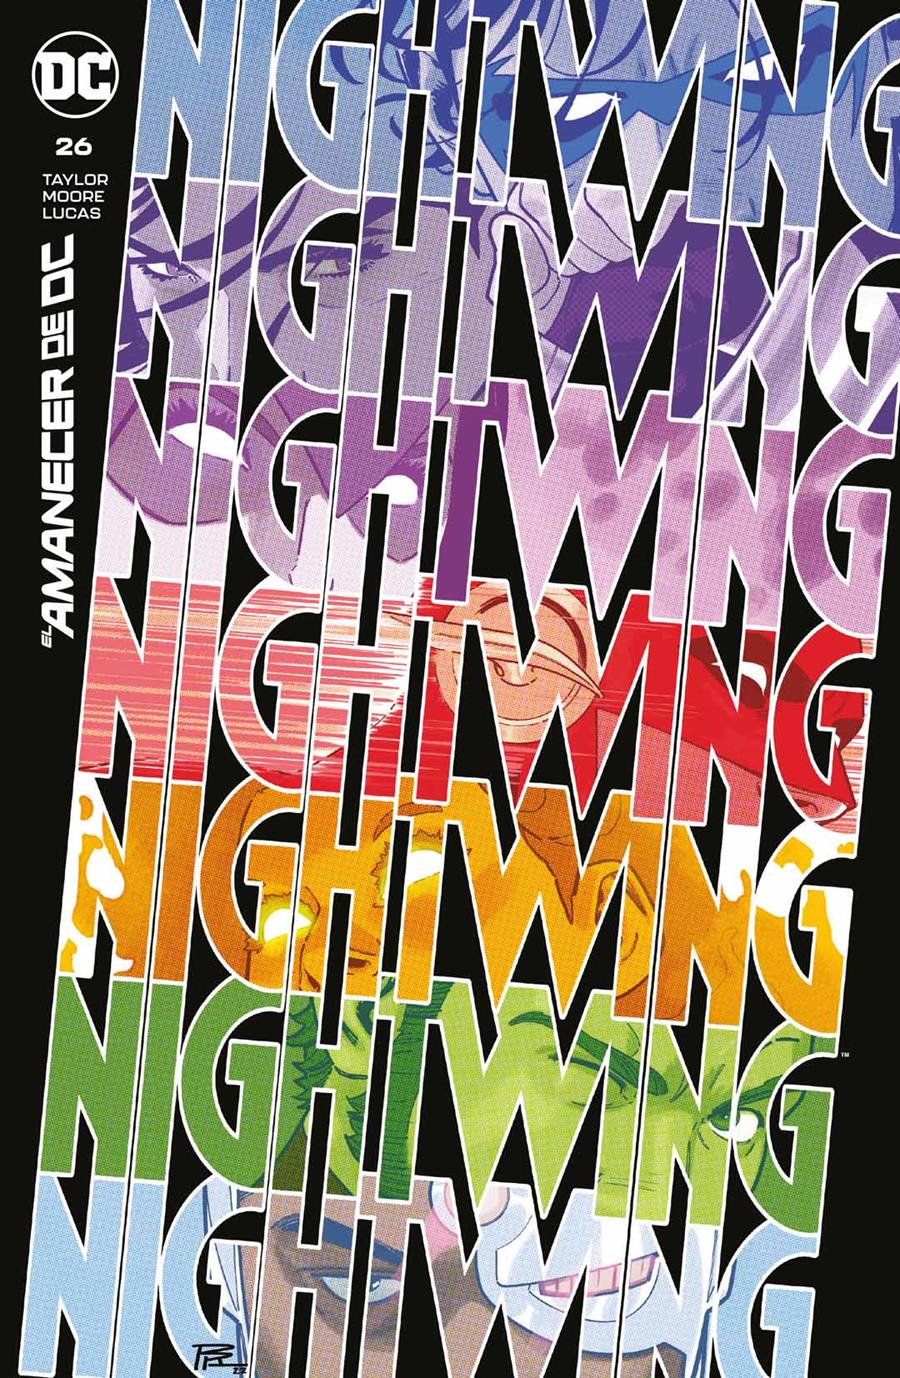 Nightwing núm. 26 | N1123-ECC38 | C. S. Pacat / Eduardo Pansica / Tom Taylor / Travis Moore | Terra de Còmic - Tu tienda de cómics online especializada en cómics, manga y merchandising